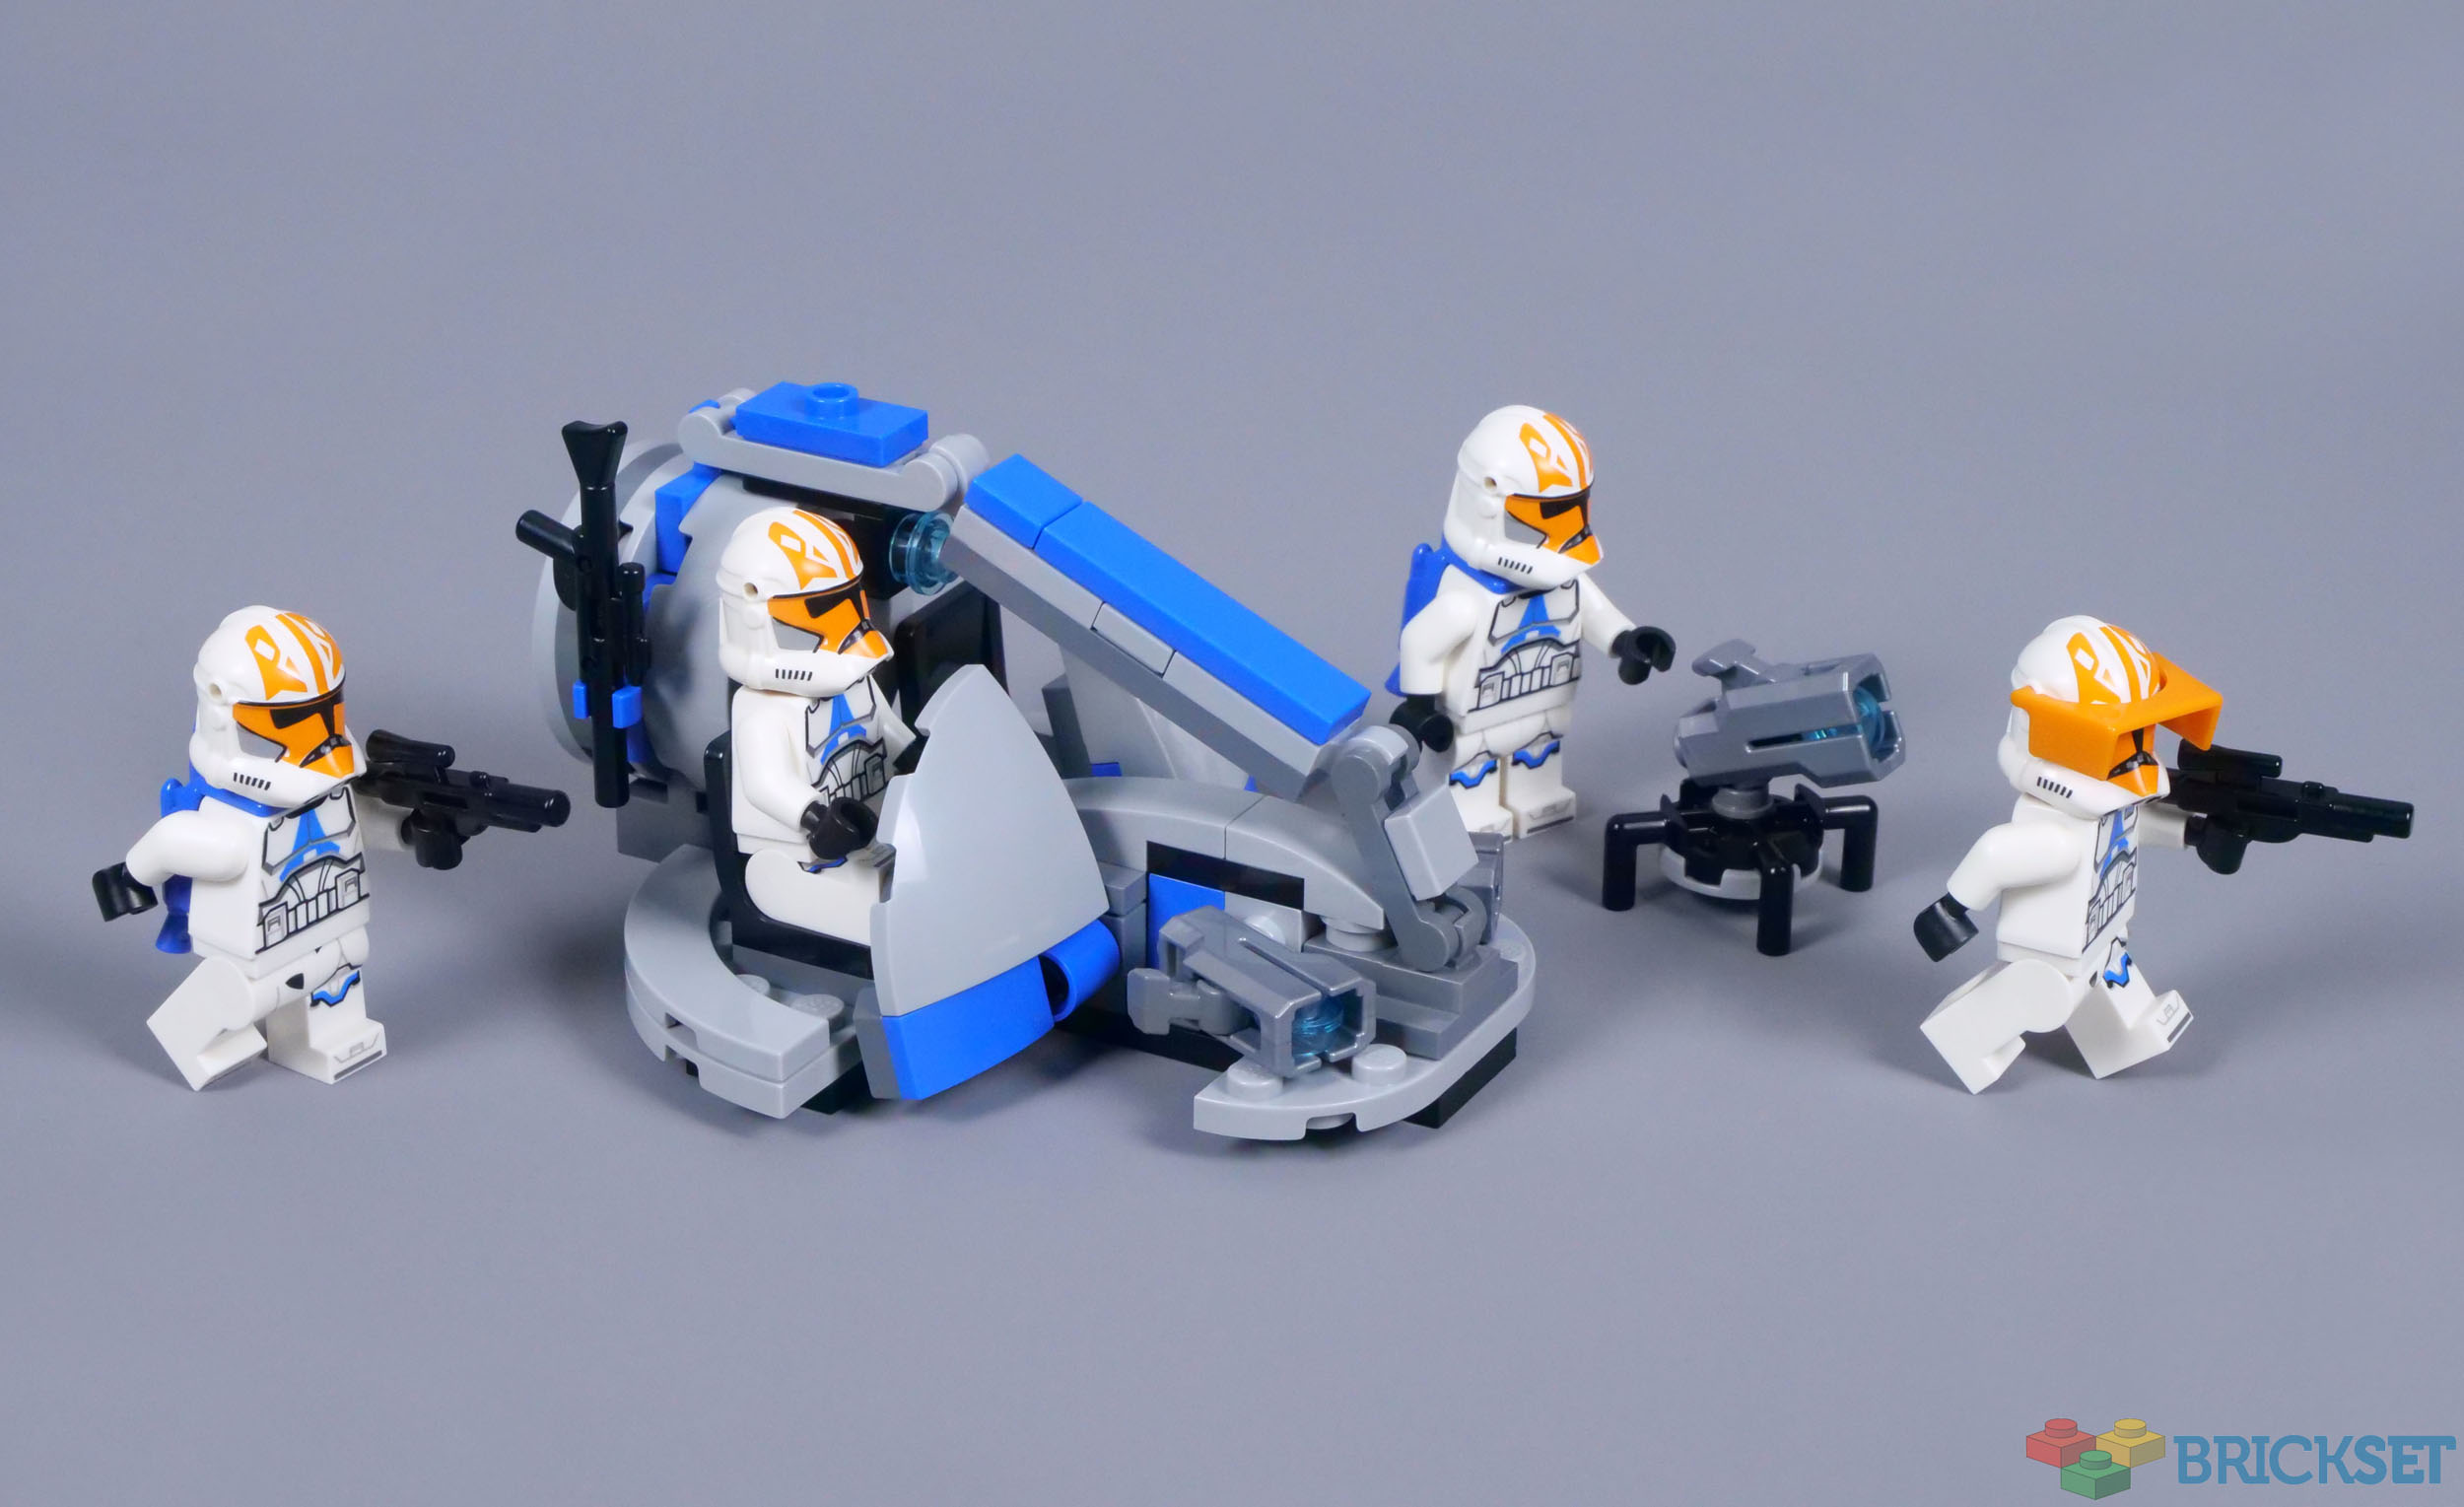 LEGO Star Wars - 501st Clone Trooper - The Brick People